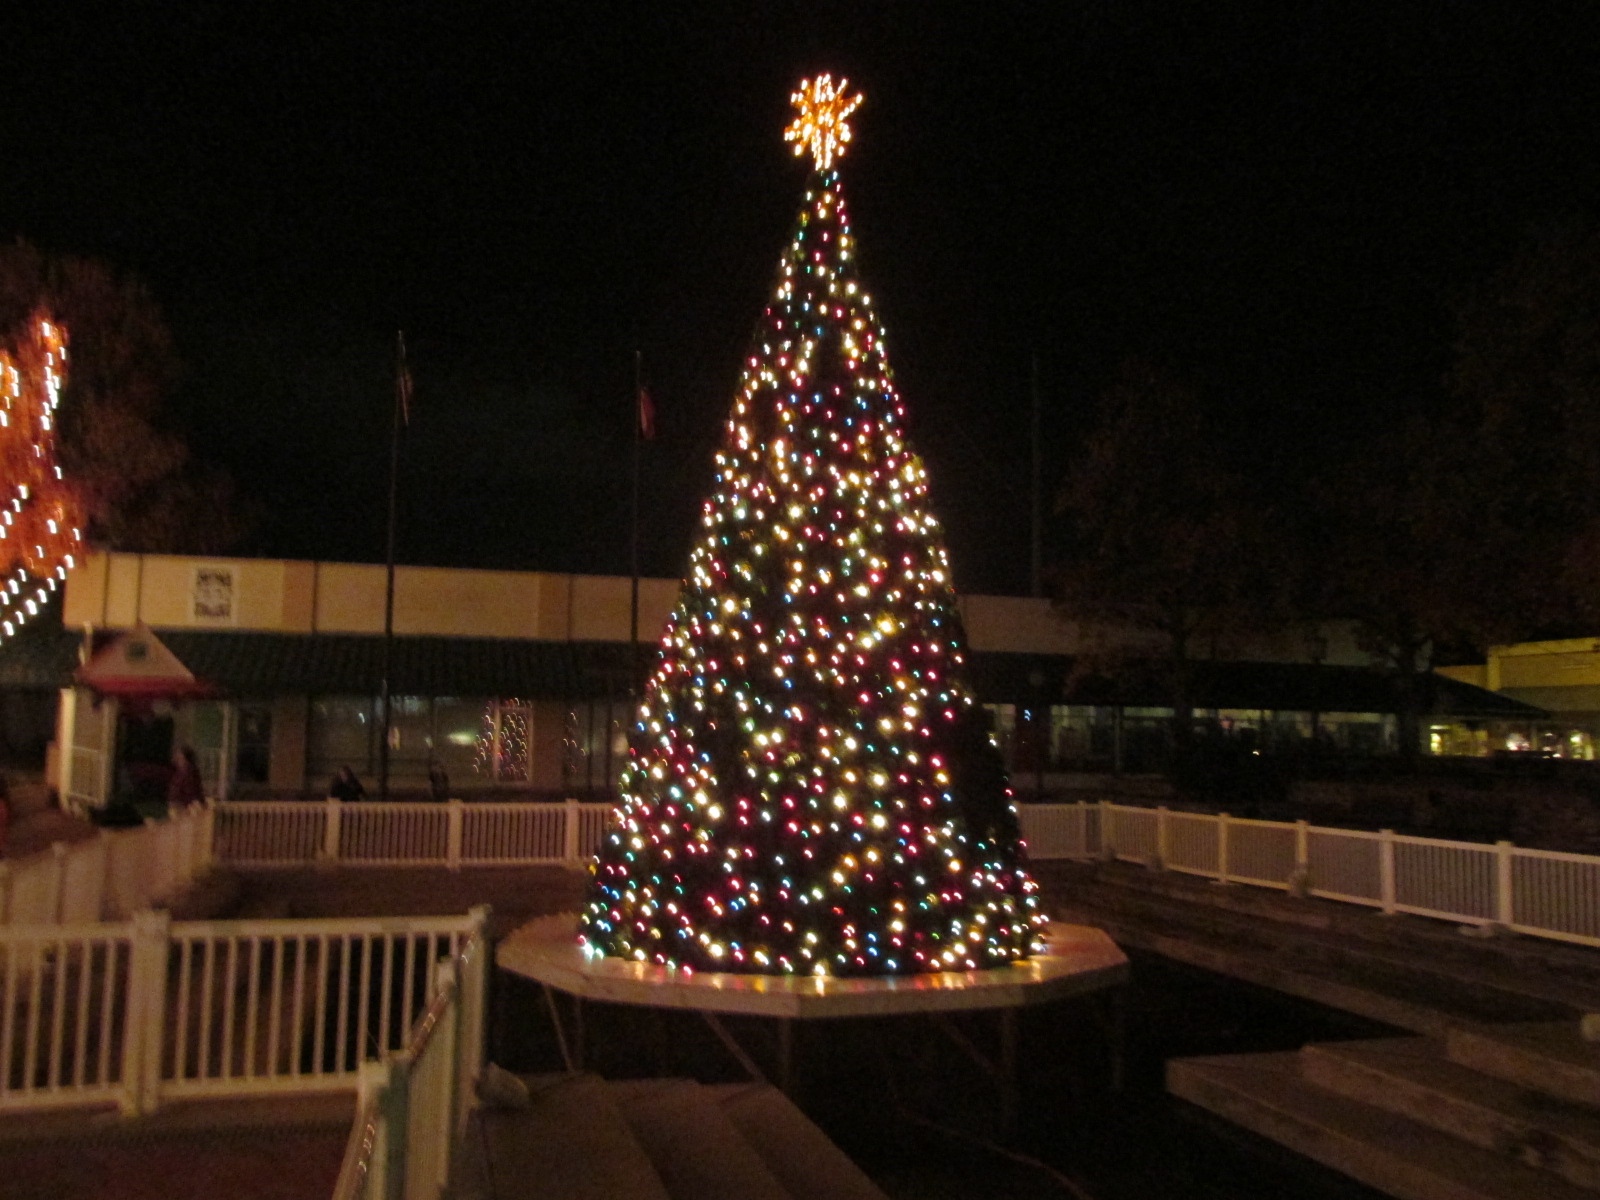 09. Test lighting of the Christmas Tree